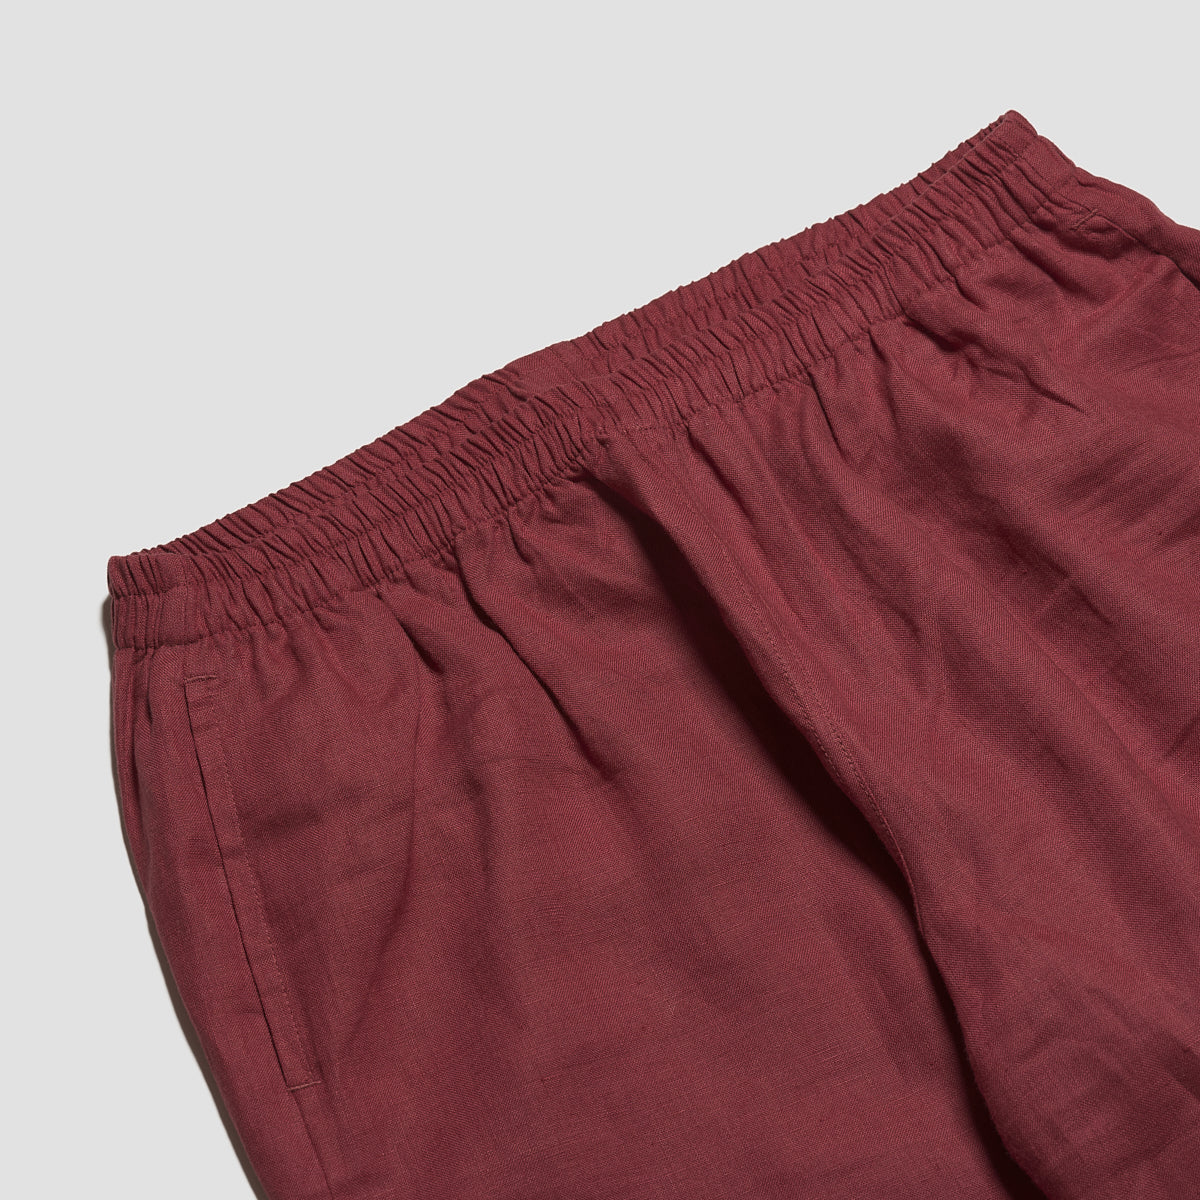 Men's Cherry Plain Linen Pajama Pants Waistband Detail